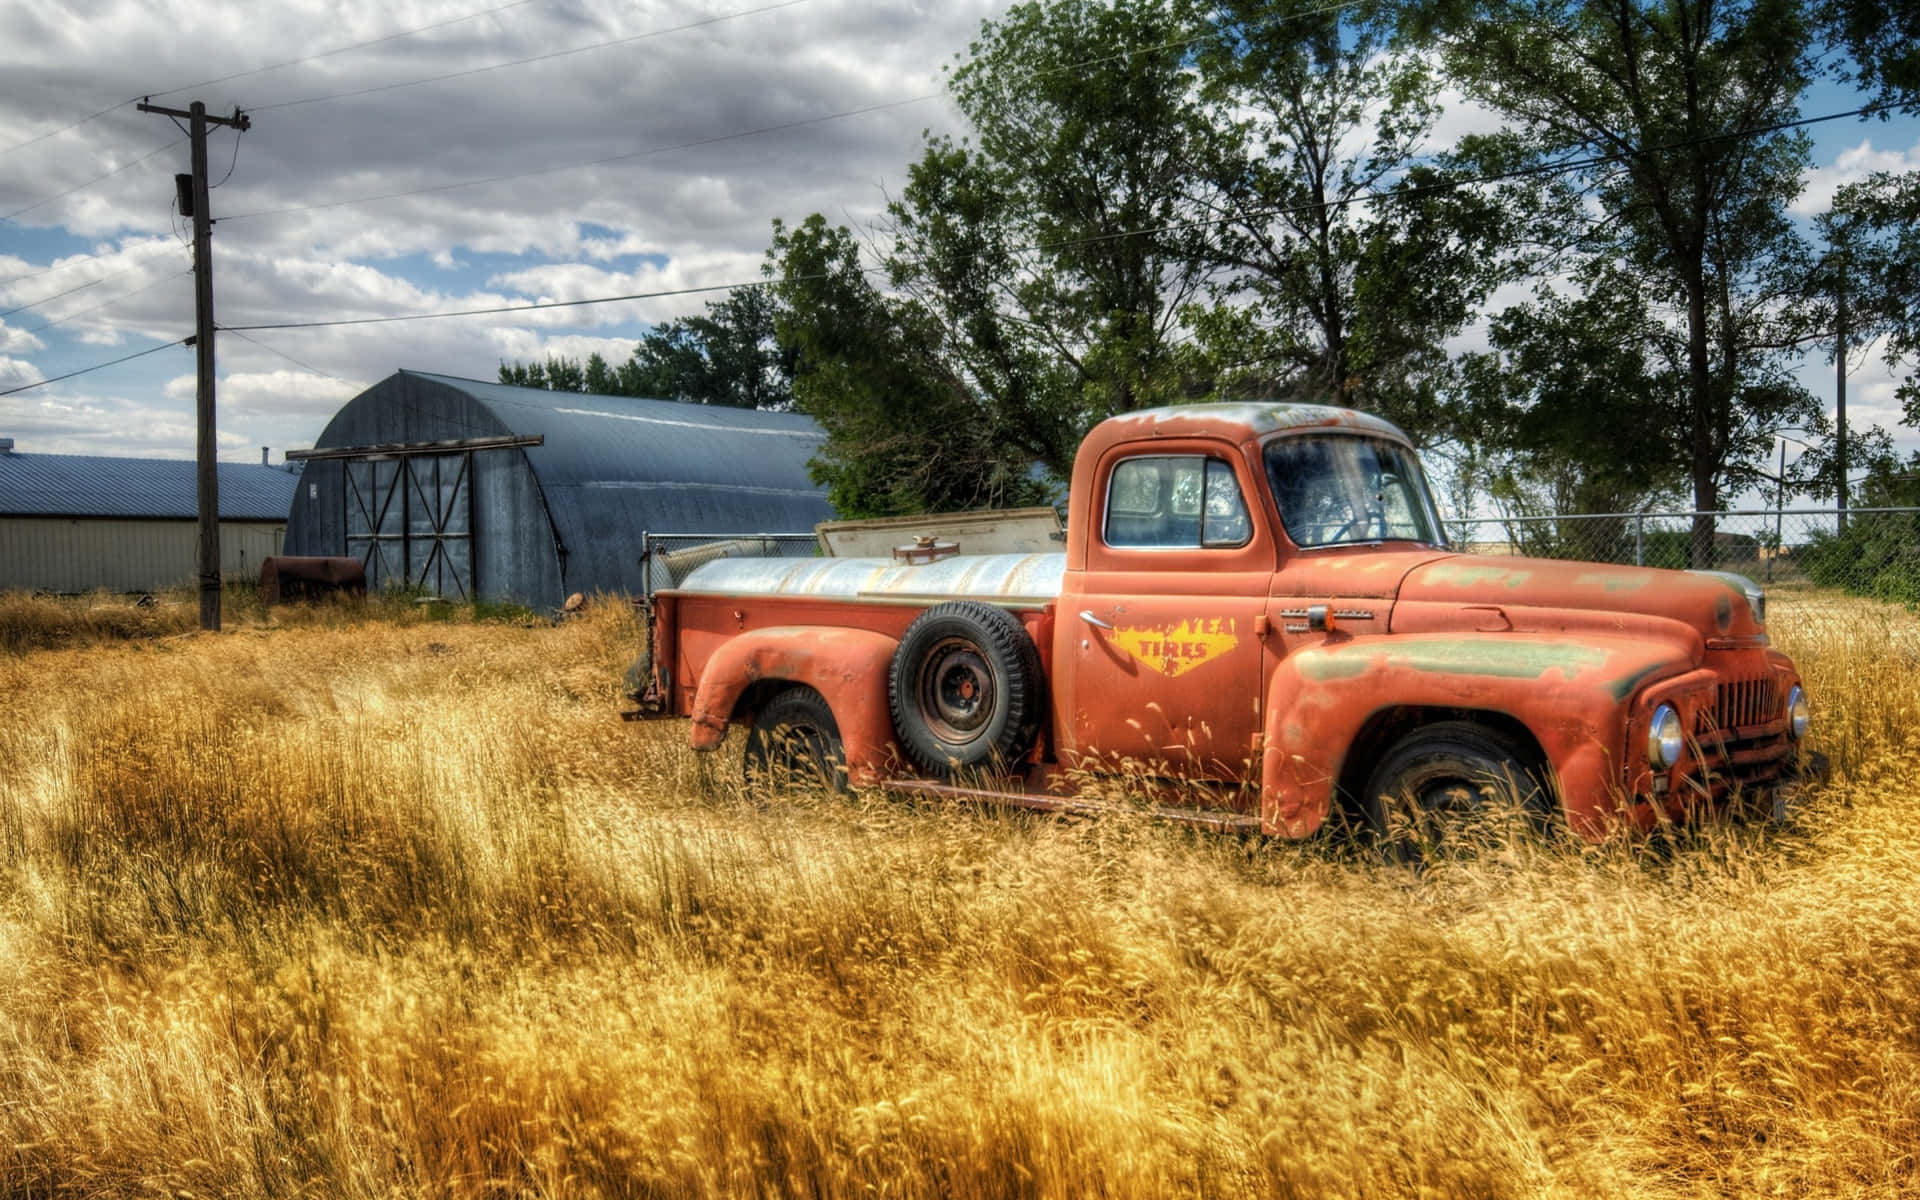 An Old Truck In A Field